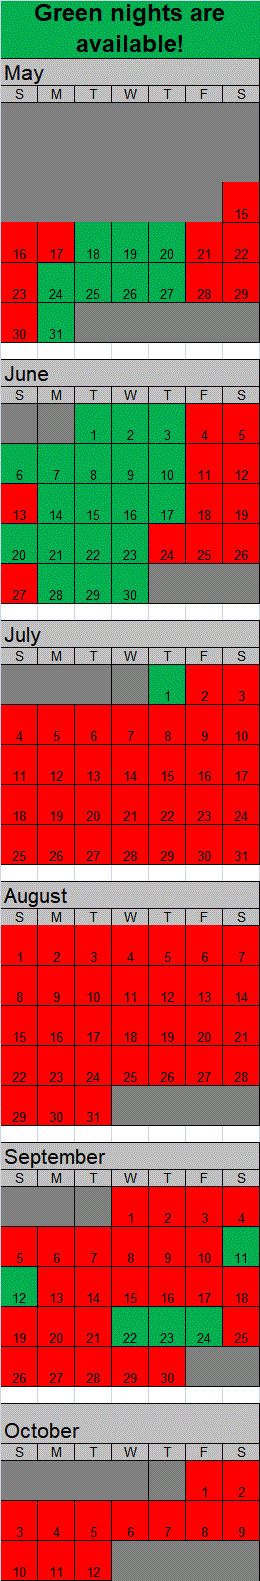 Lakeview Site 2 2015 Calendar